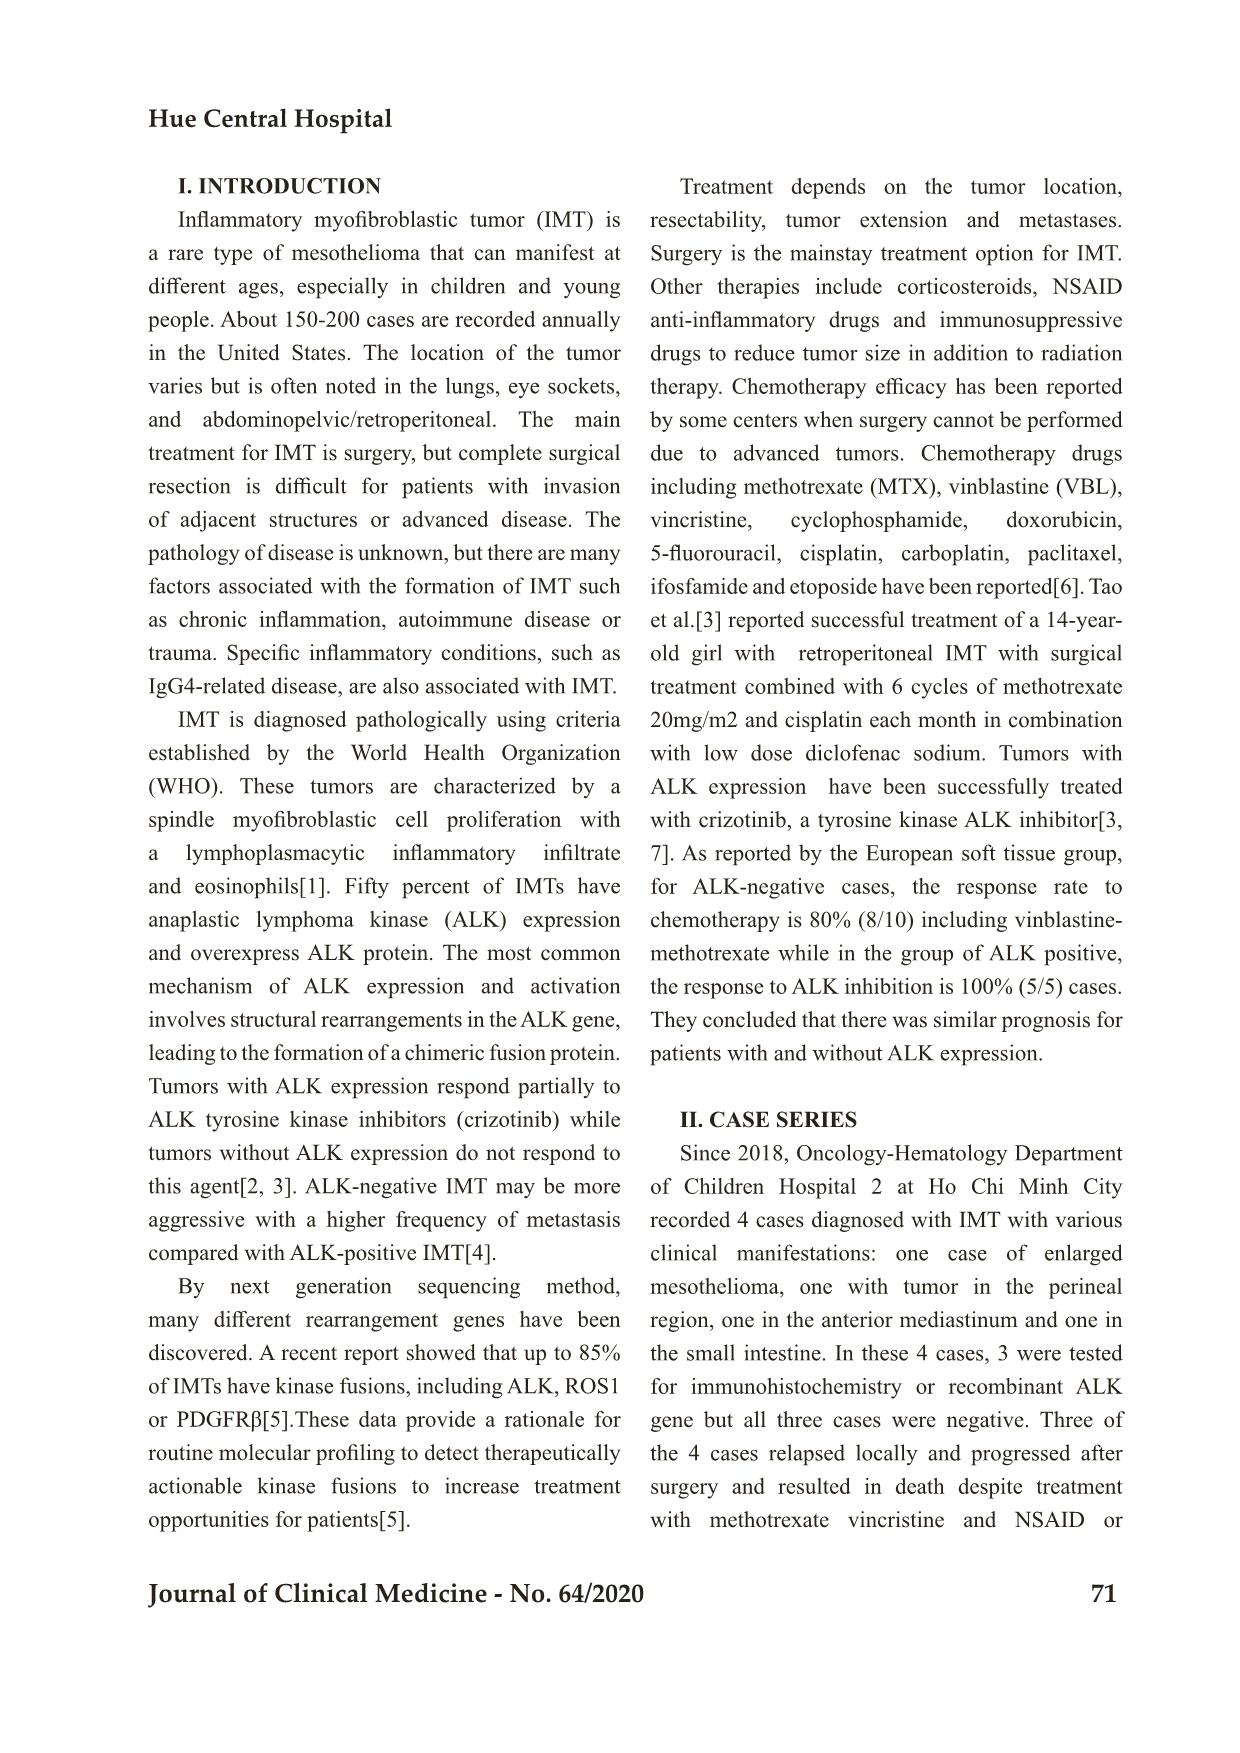 Characteristic of inflammatory myofibrinoblastic tumor: Retrospective analysis of 4 cases in children hospital number 2 trang 2